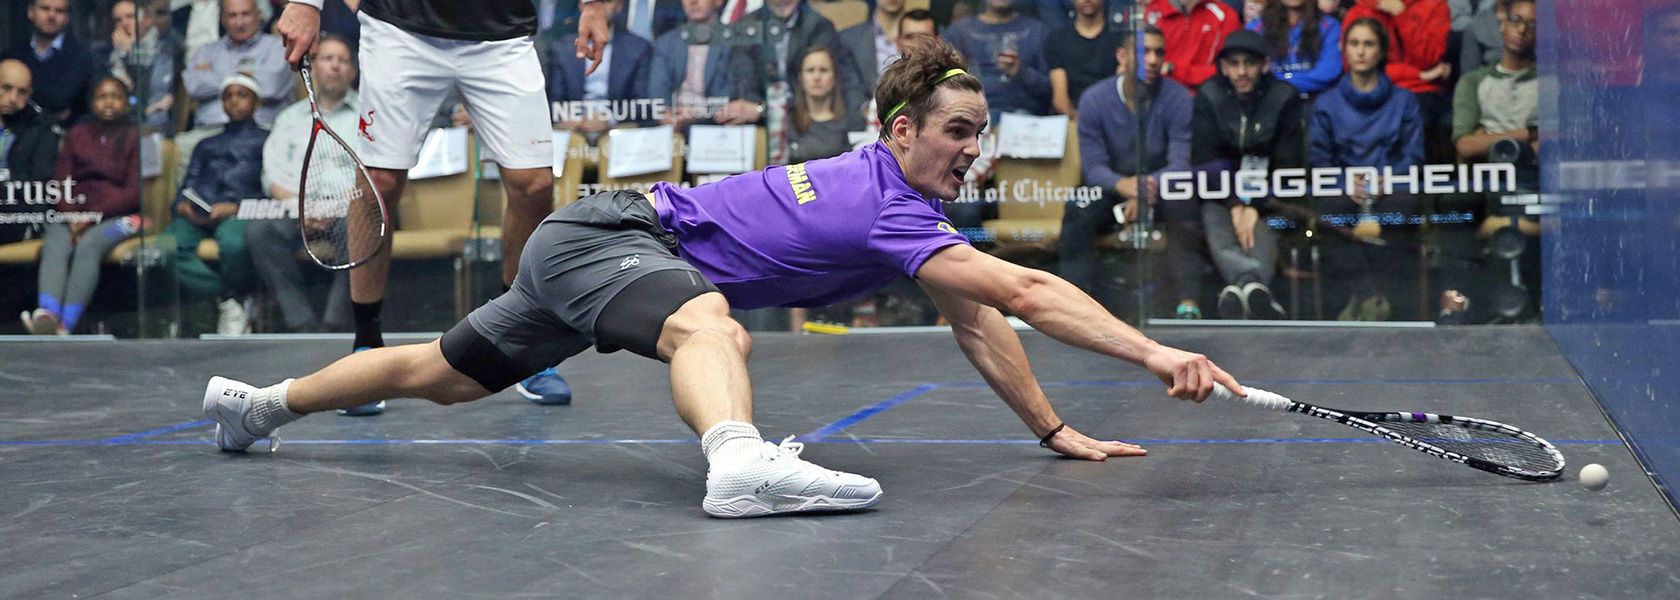 Flexibility for squash